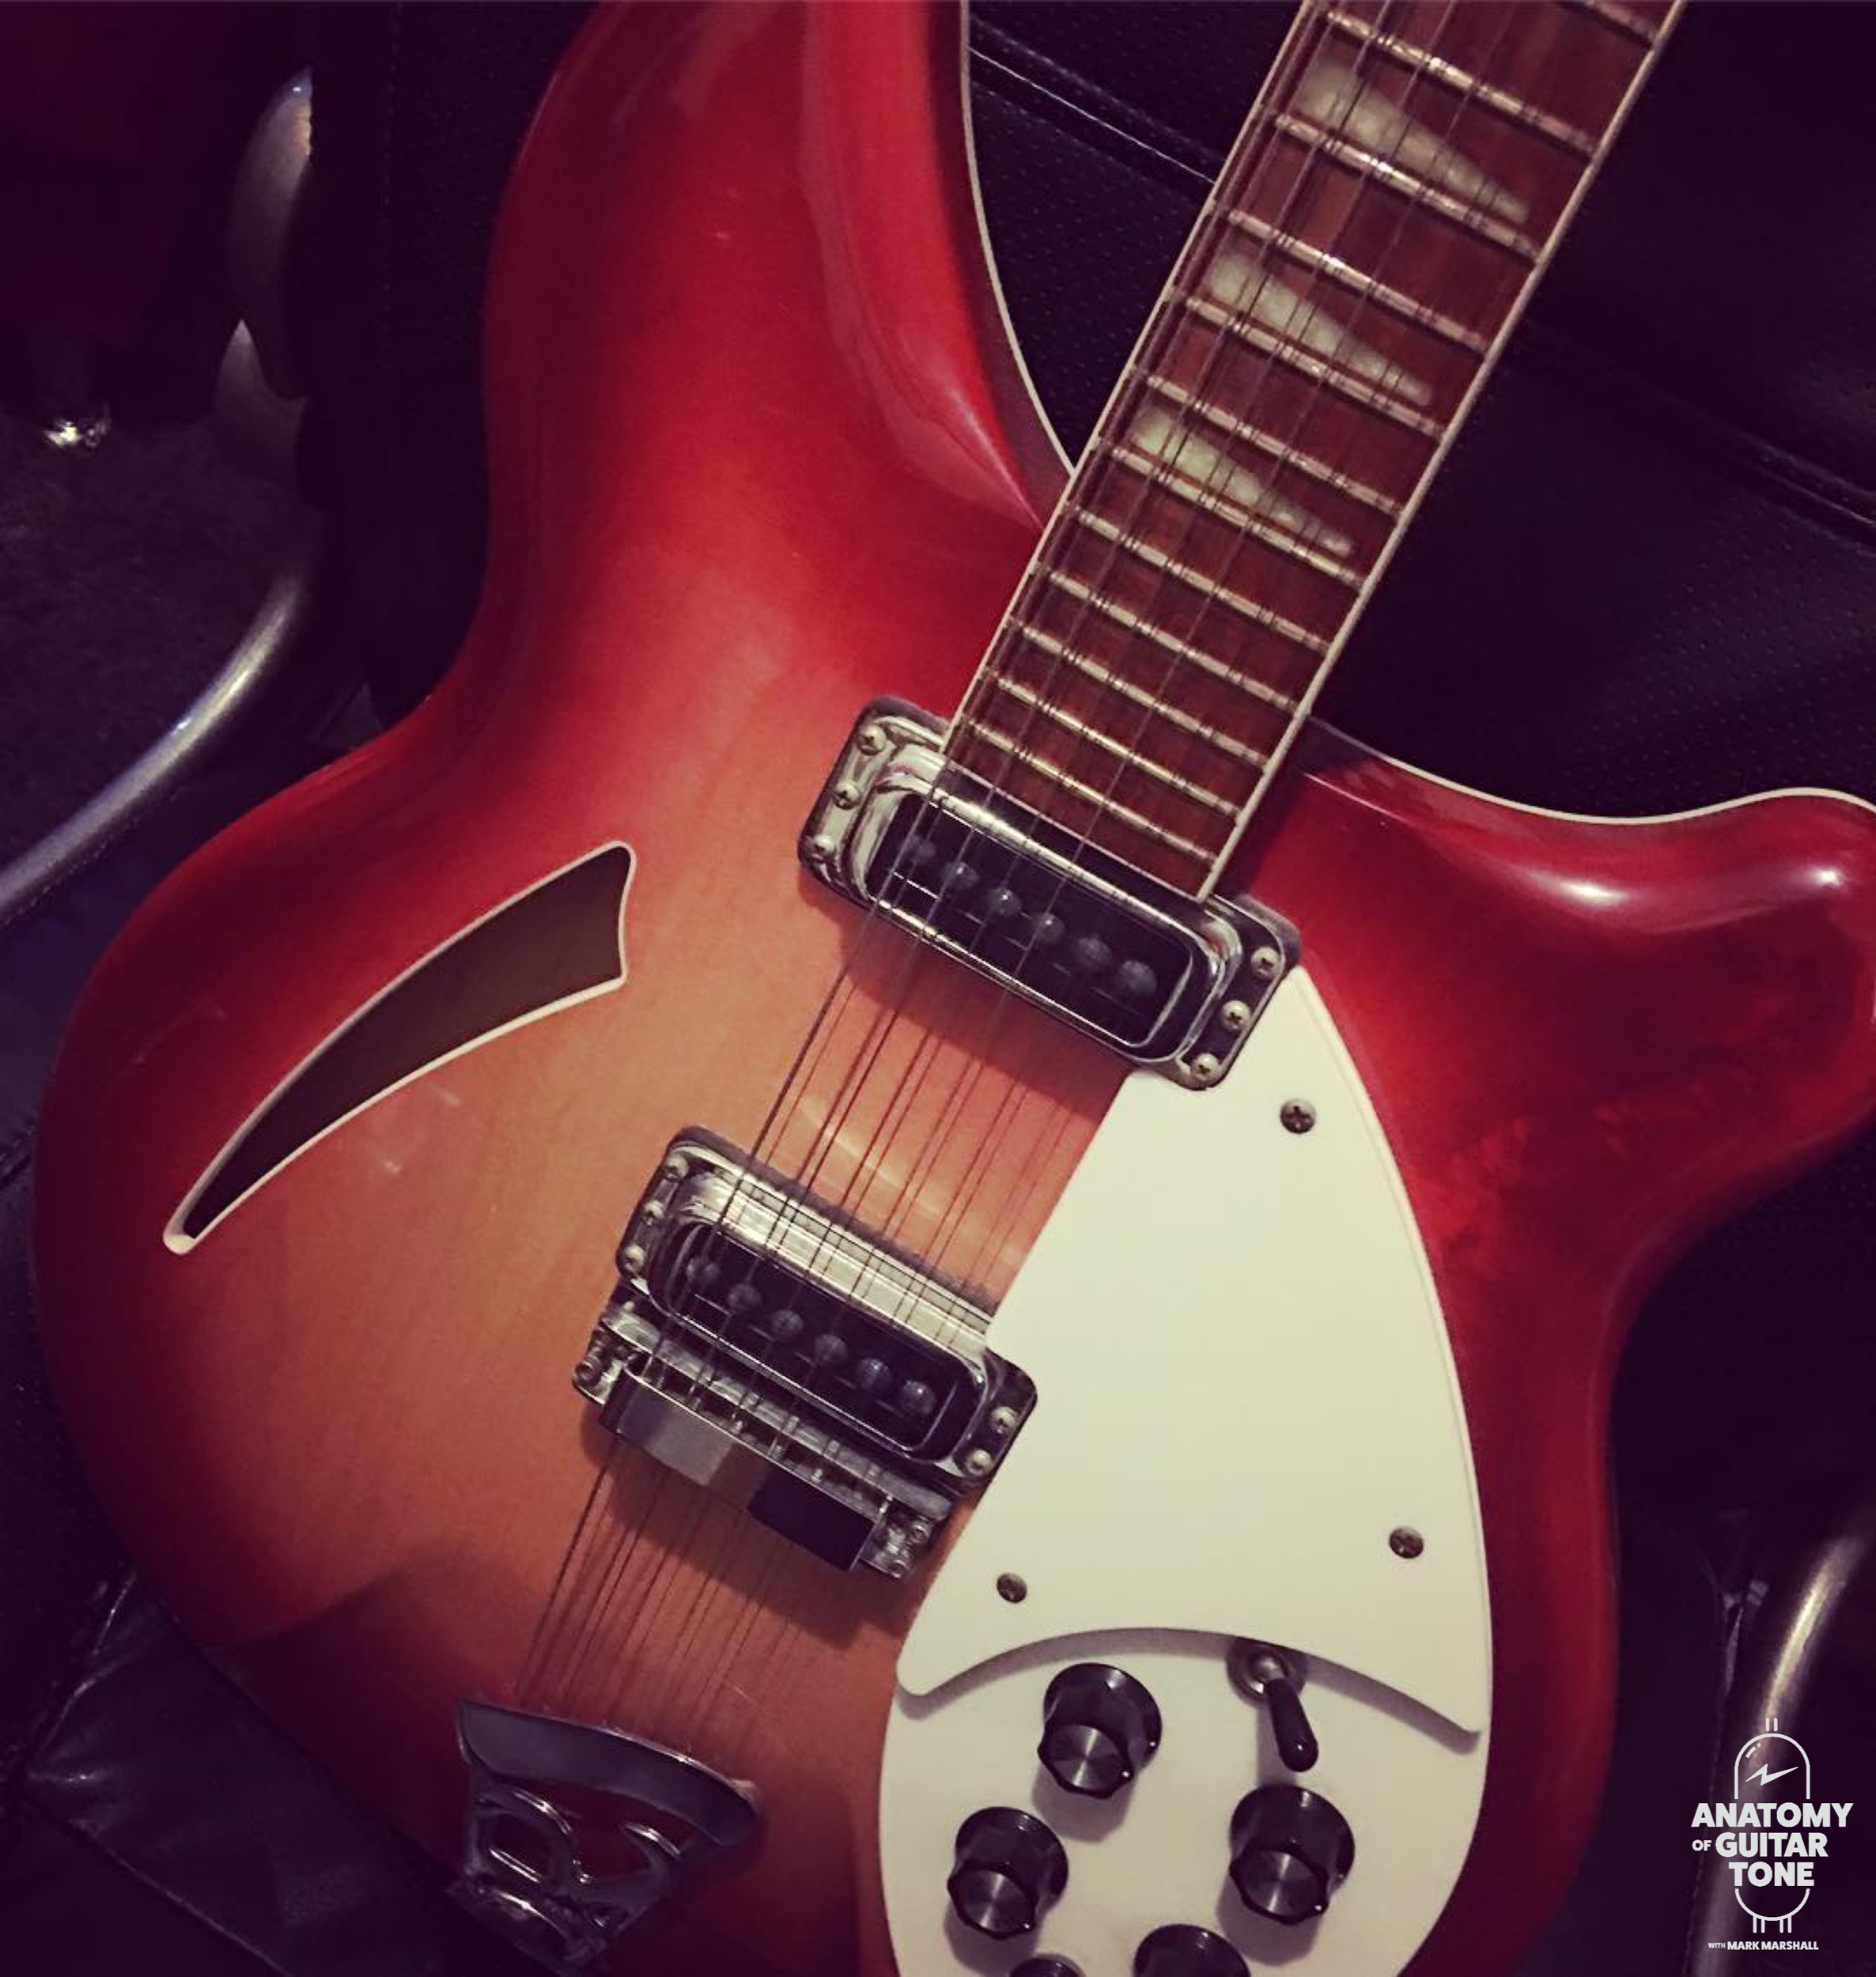 Getting that vintage Rickenbacker 12 string tone — Anatomy of Guitar Tone